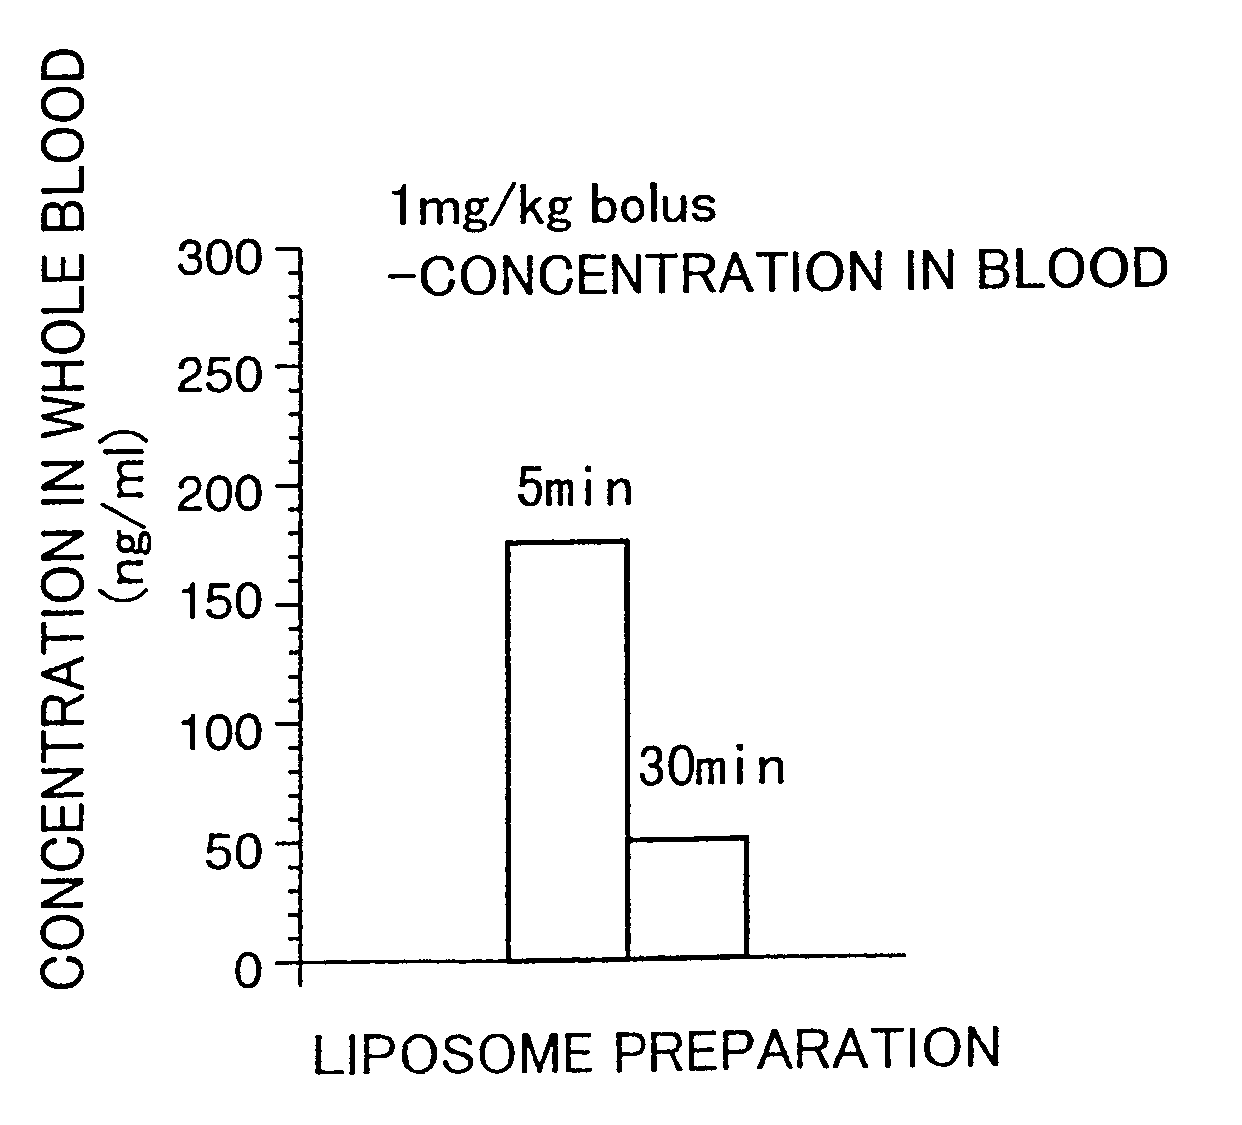 Liposome preparations